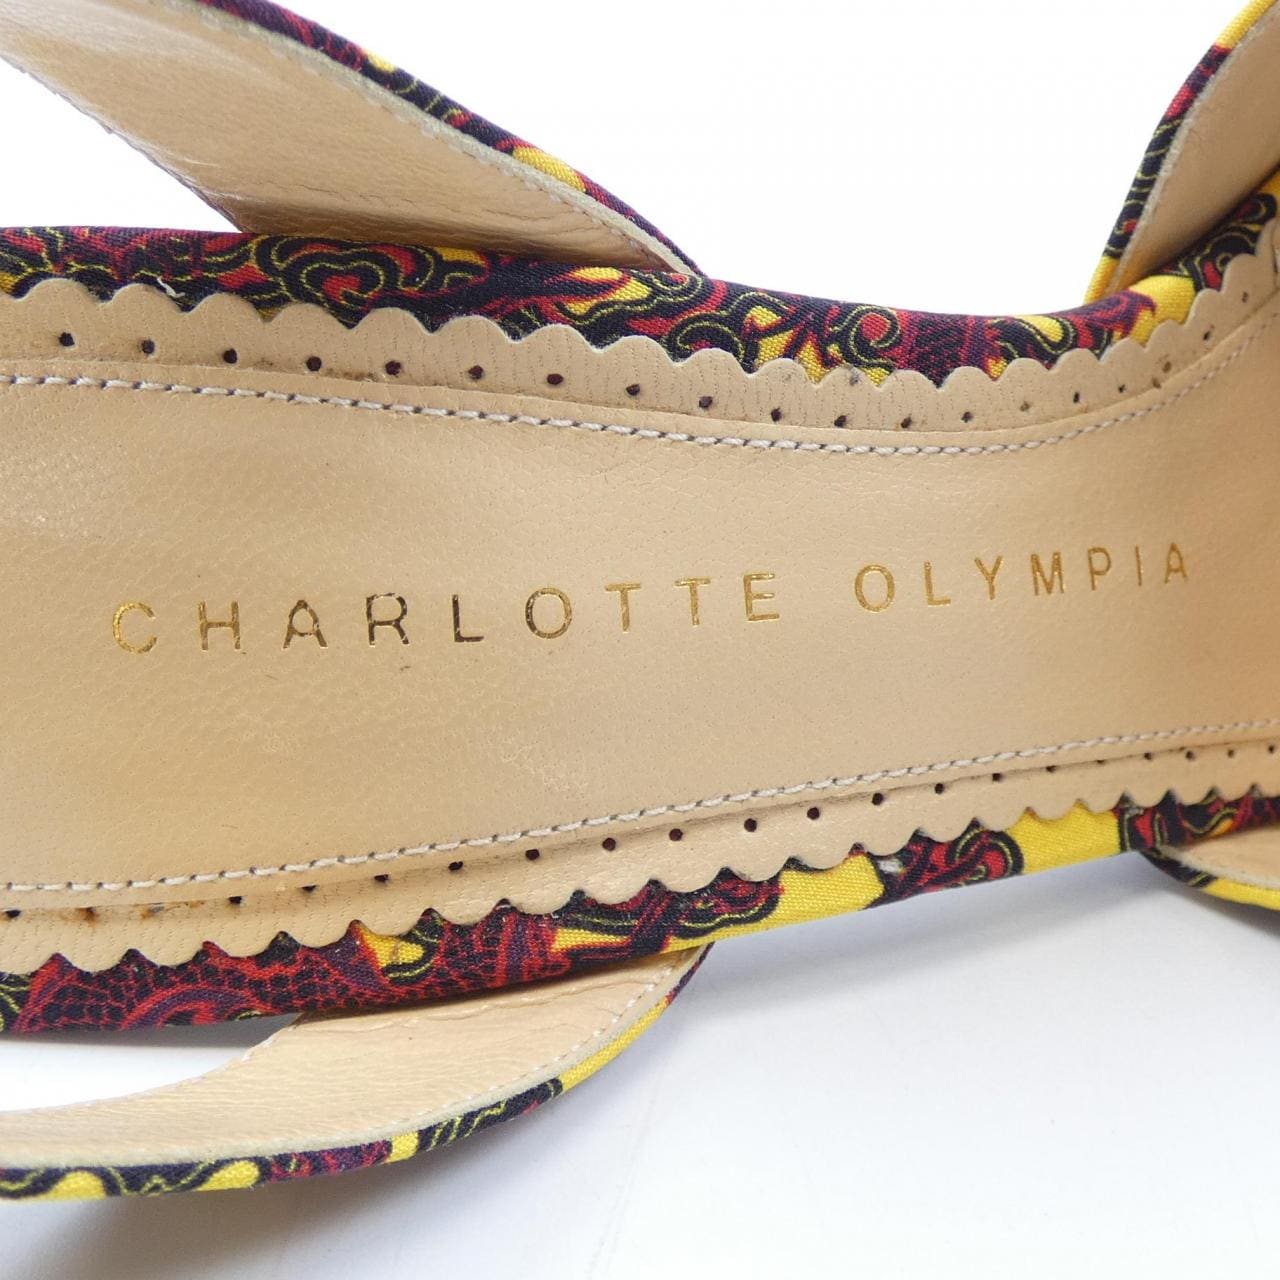 夏洛特奥林匹亚CHARLOTTE OLYMPIA凉鞋